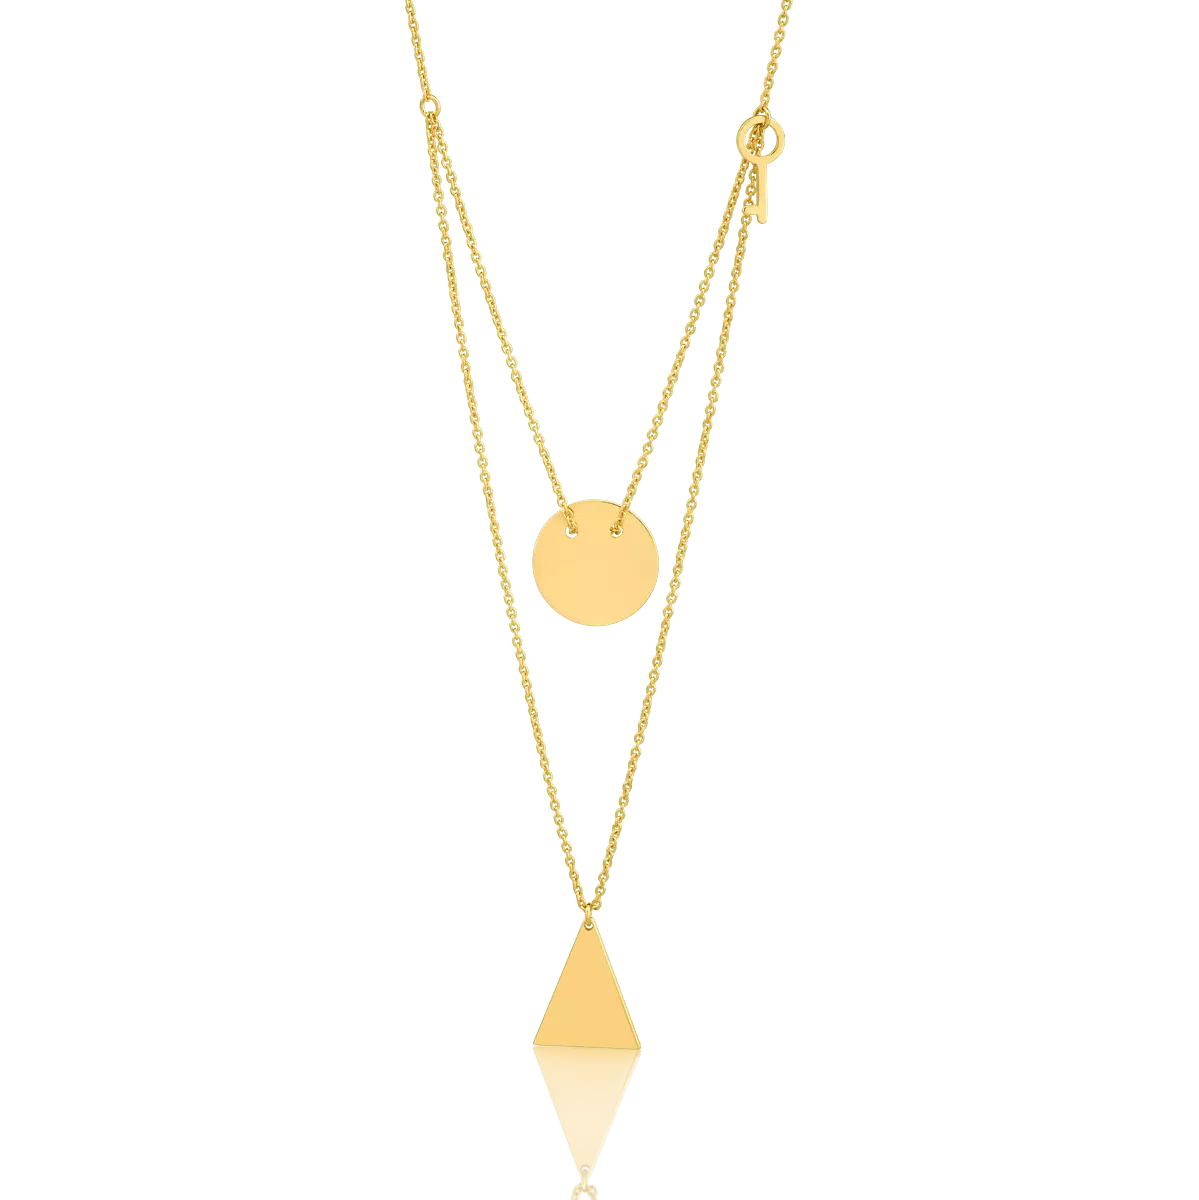 14K yellow gold geometric pendants chain